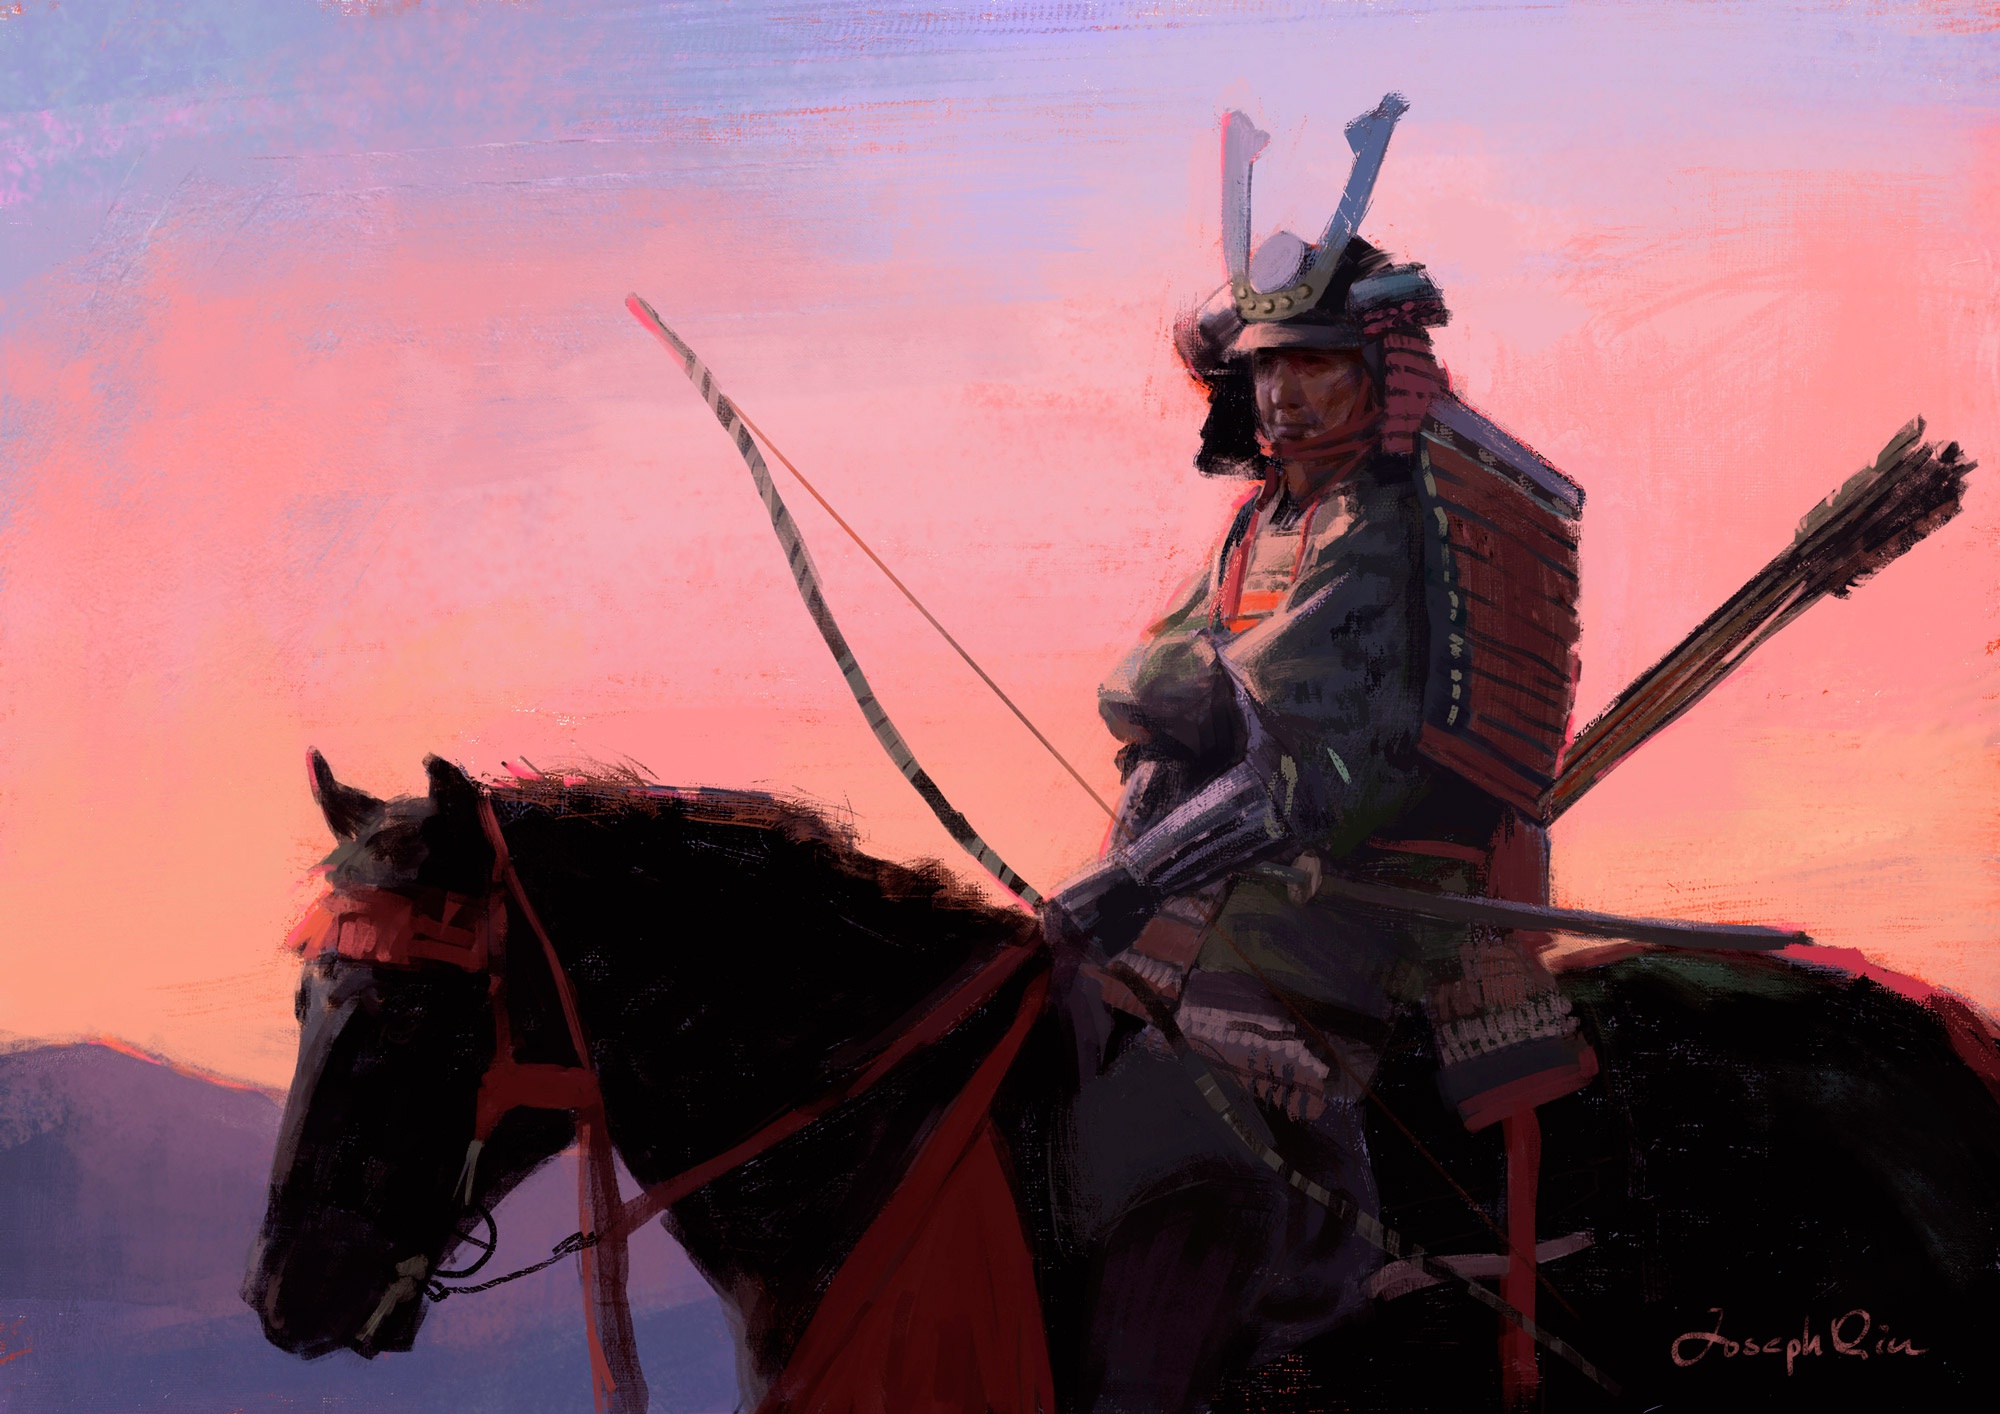 General 2000x1414 red dusk samurai horse Joseph Qin digital art watermarked